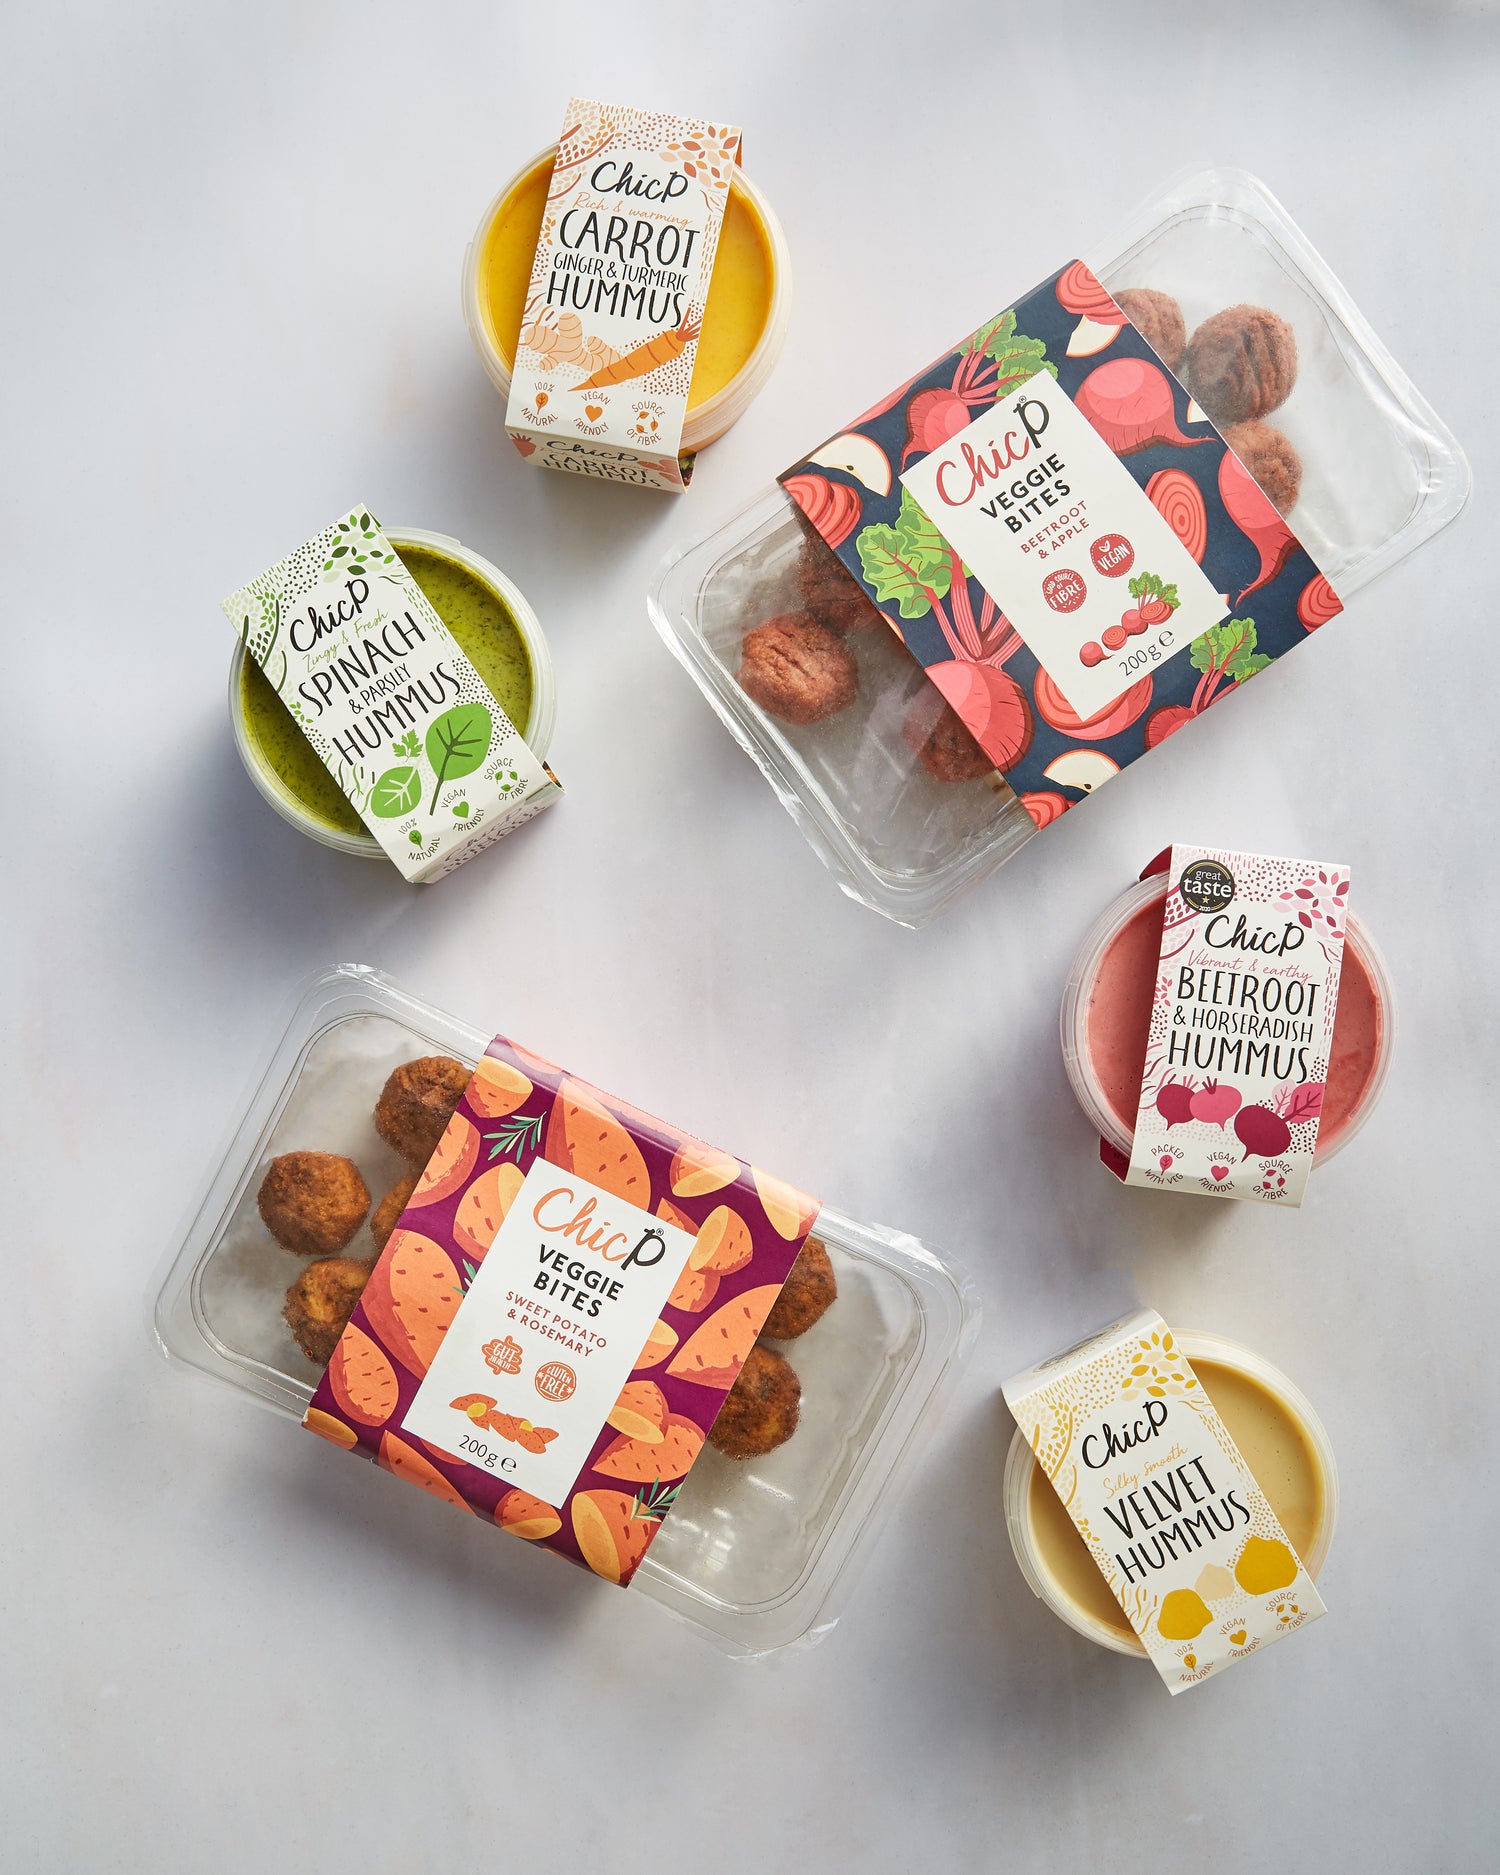 Full range of ChicP's hummus and veggie bites in their packaging